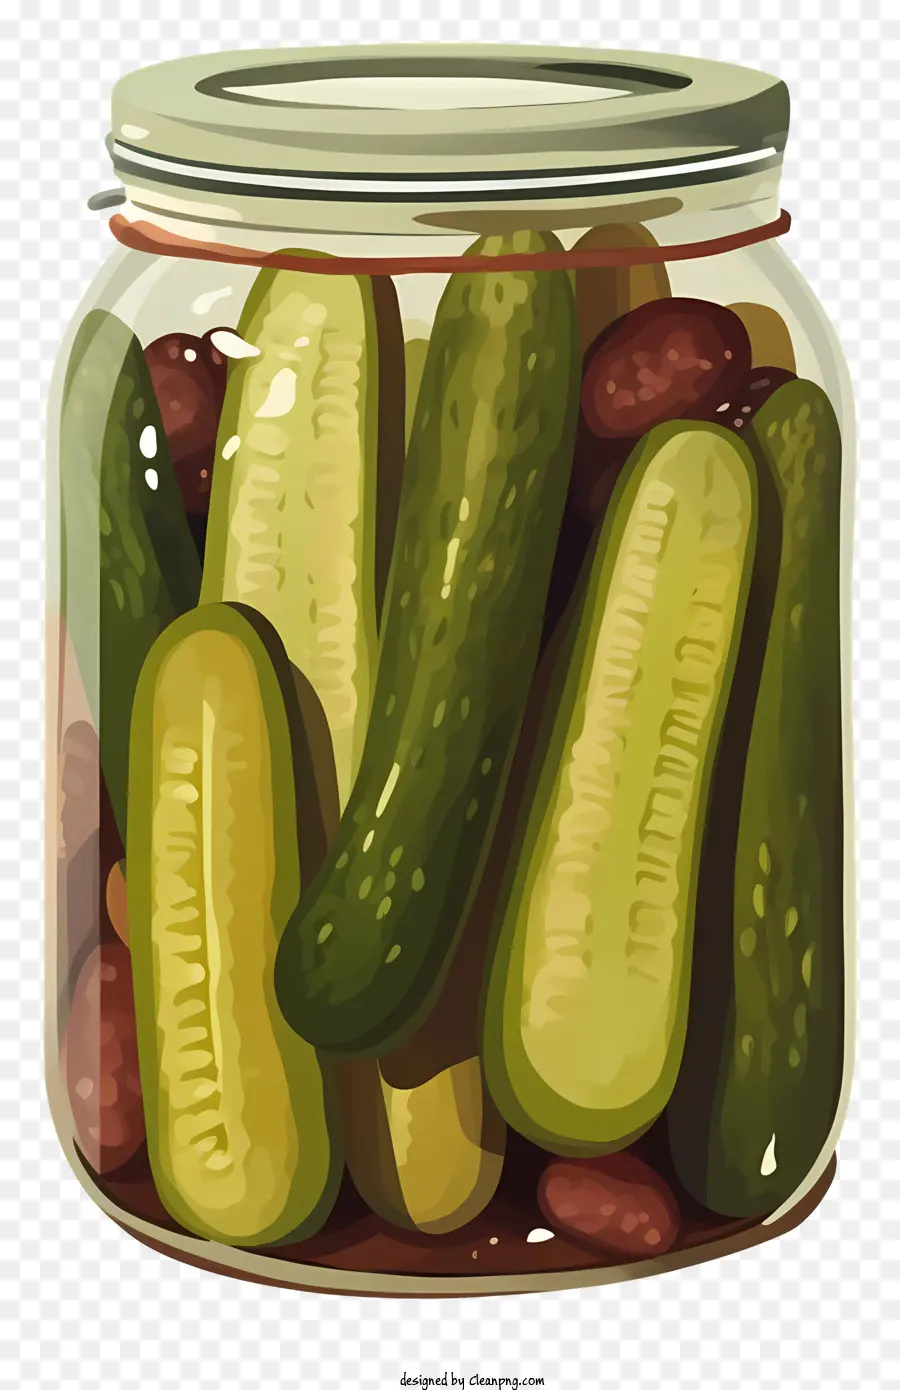 pickles pickles sliced cucumbers briney liquid garlic